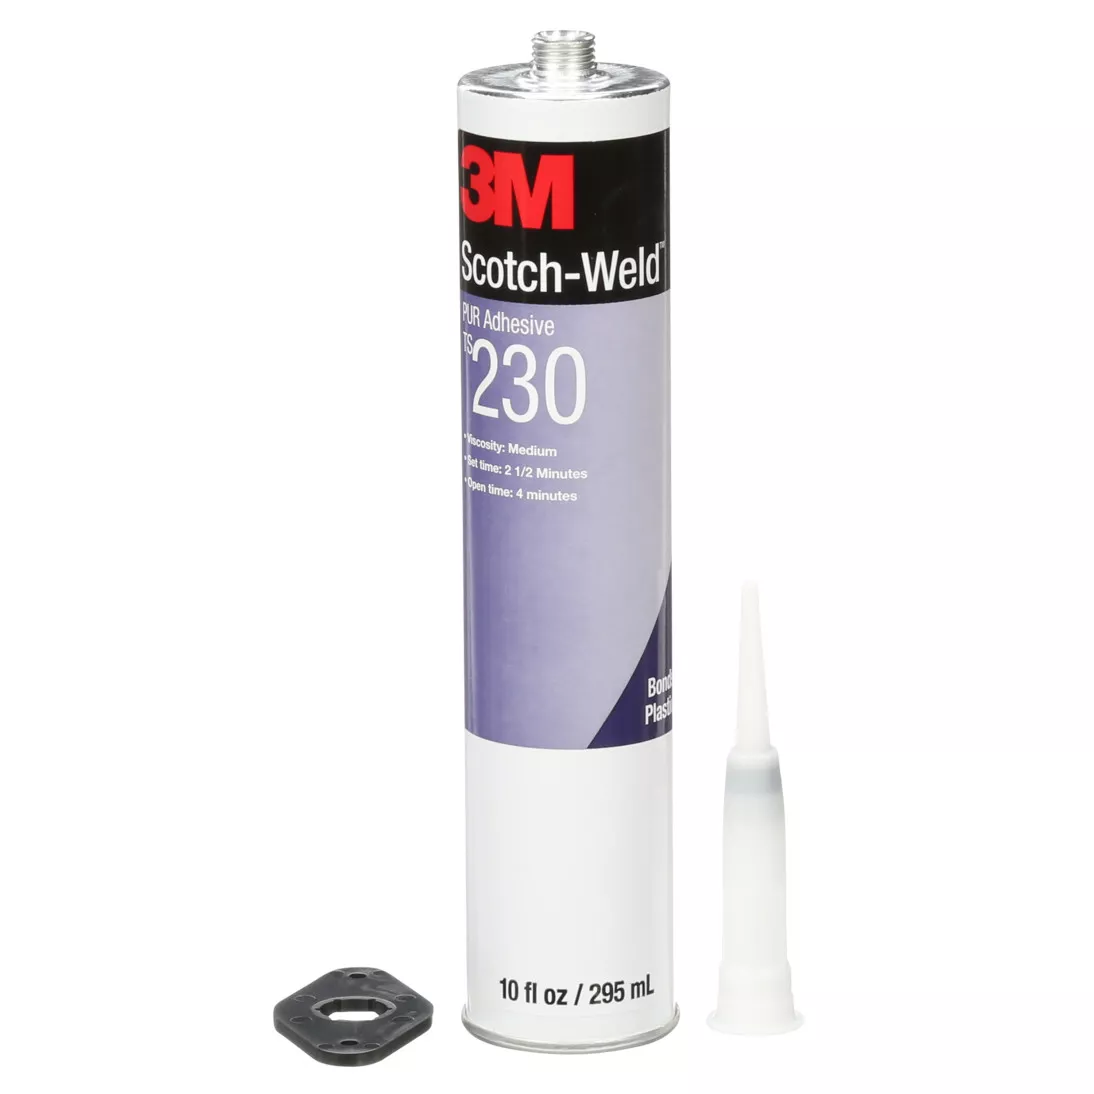 3M™ Scotch-Weld™ PUR Adhesive TS230, Off-White, 1/10 Gallon Cartridge,
5/case